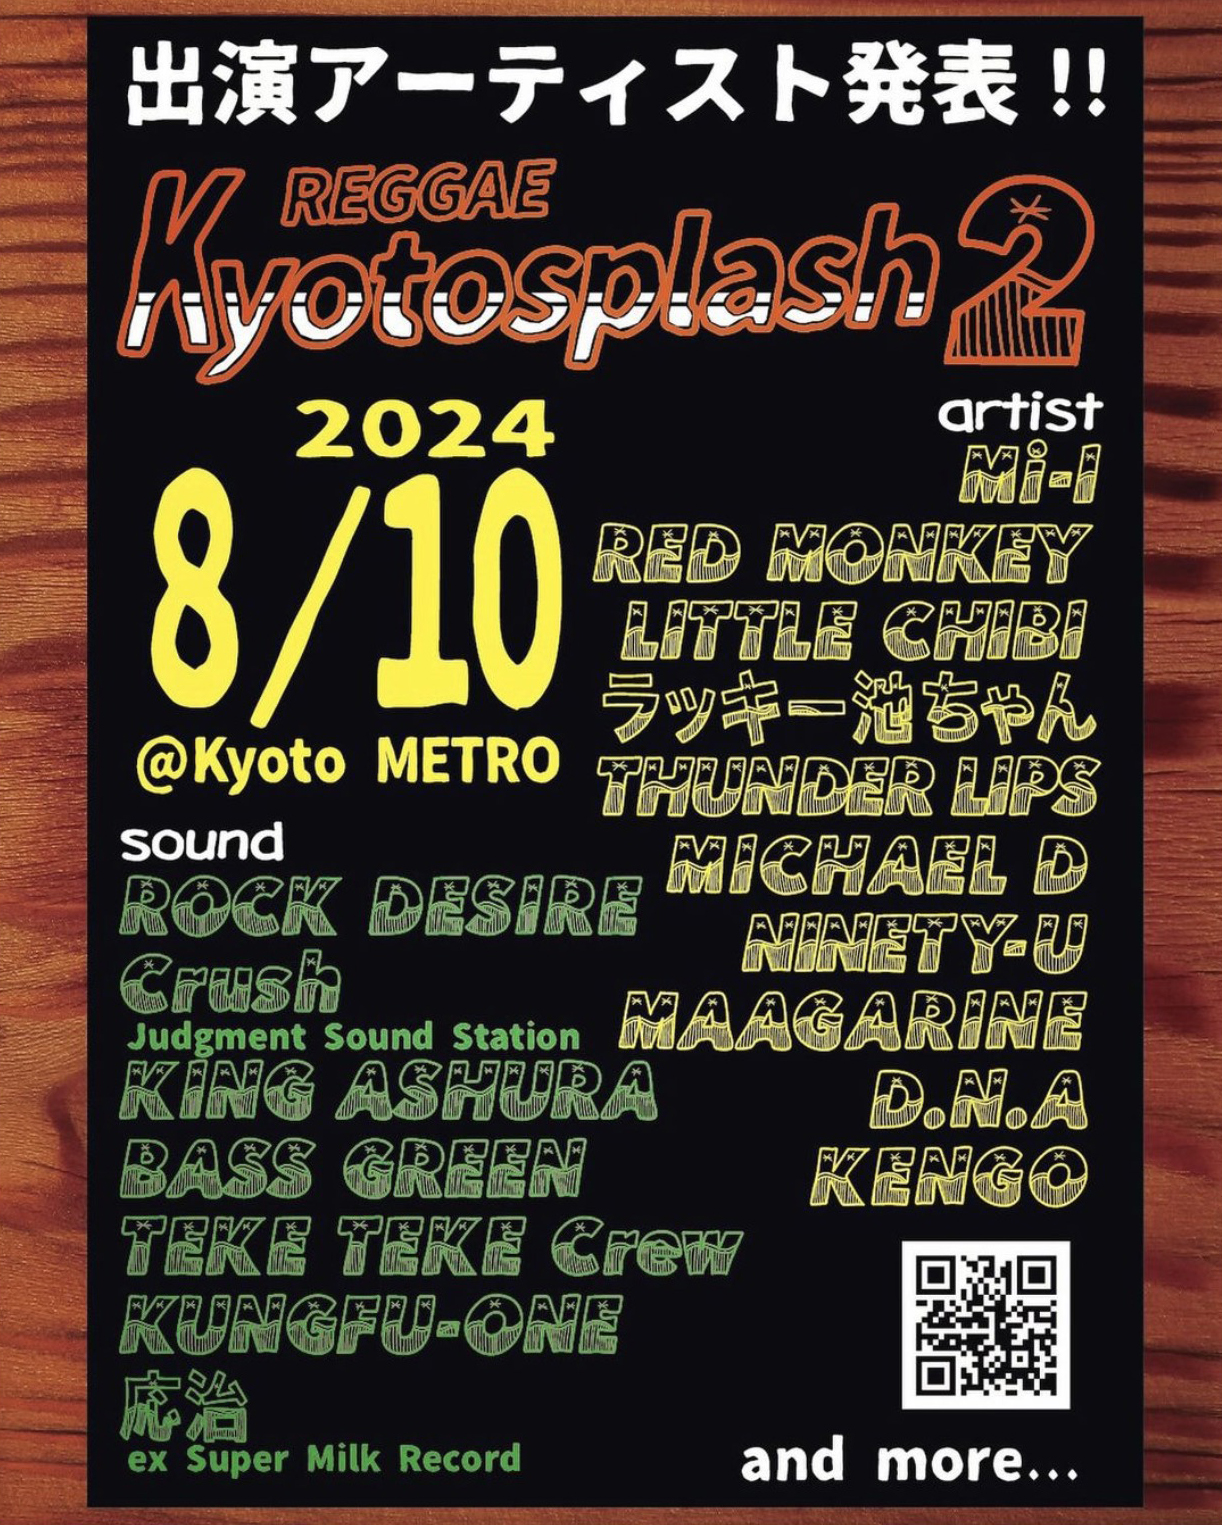 REGGAE Kyotosplash 2 | CLUB METRO | 京都メトロ